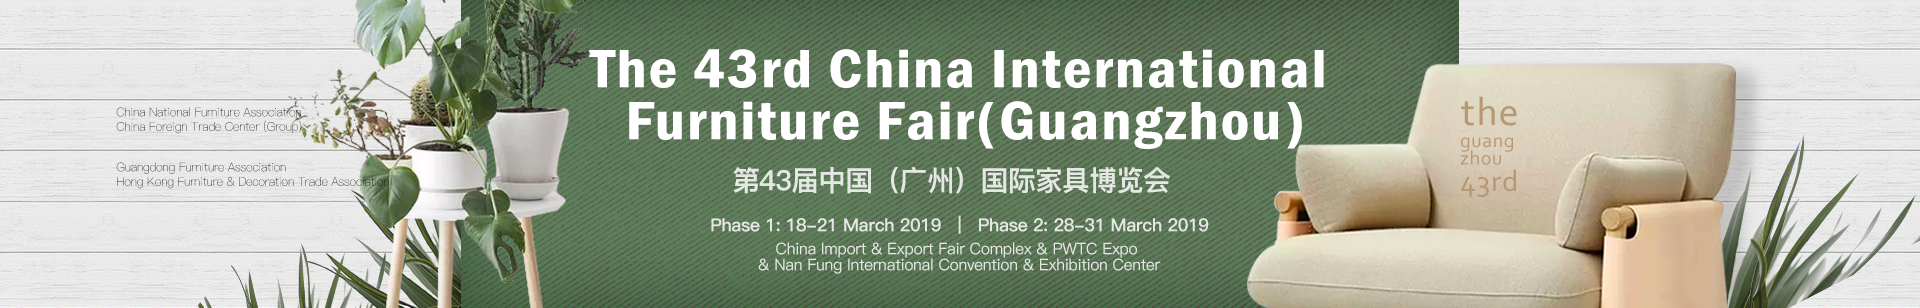 The 43rd China International Furniture Fair(Guangzhou)